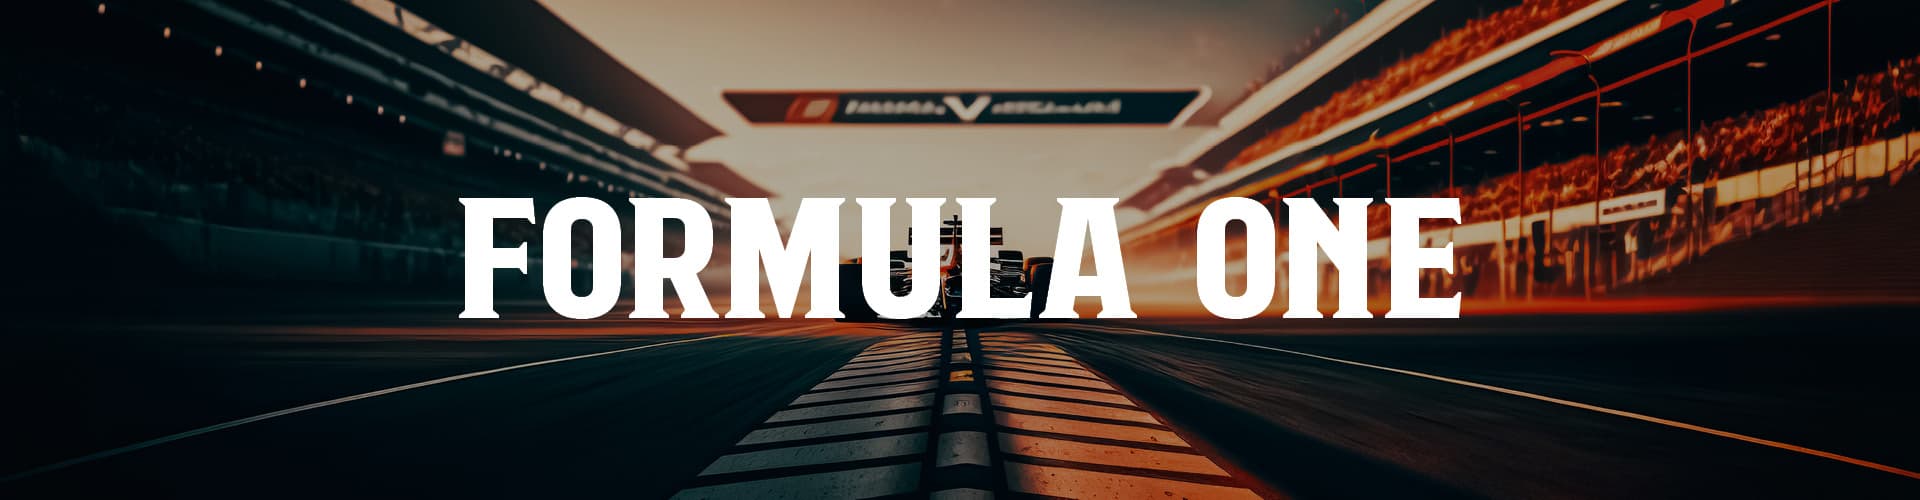 Watch Formula 1 live in Knutsford